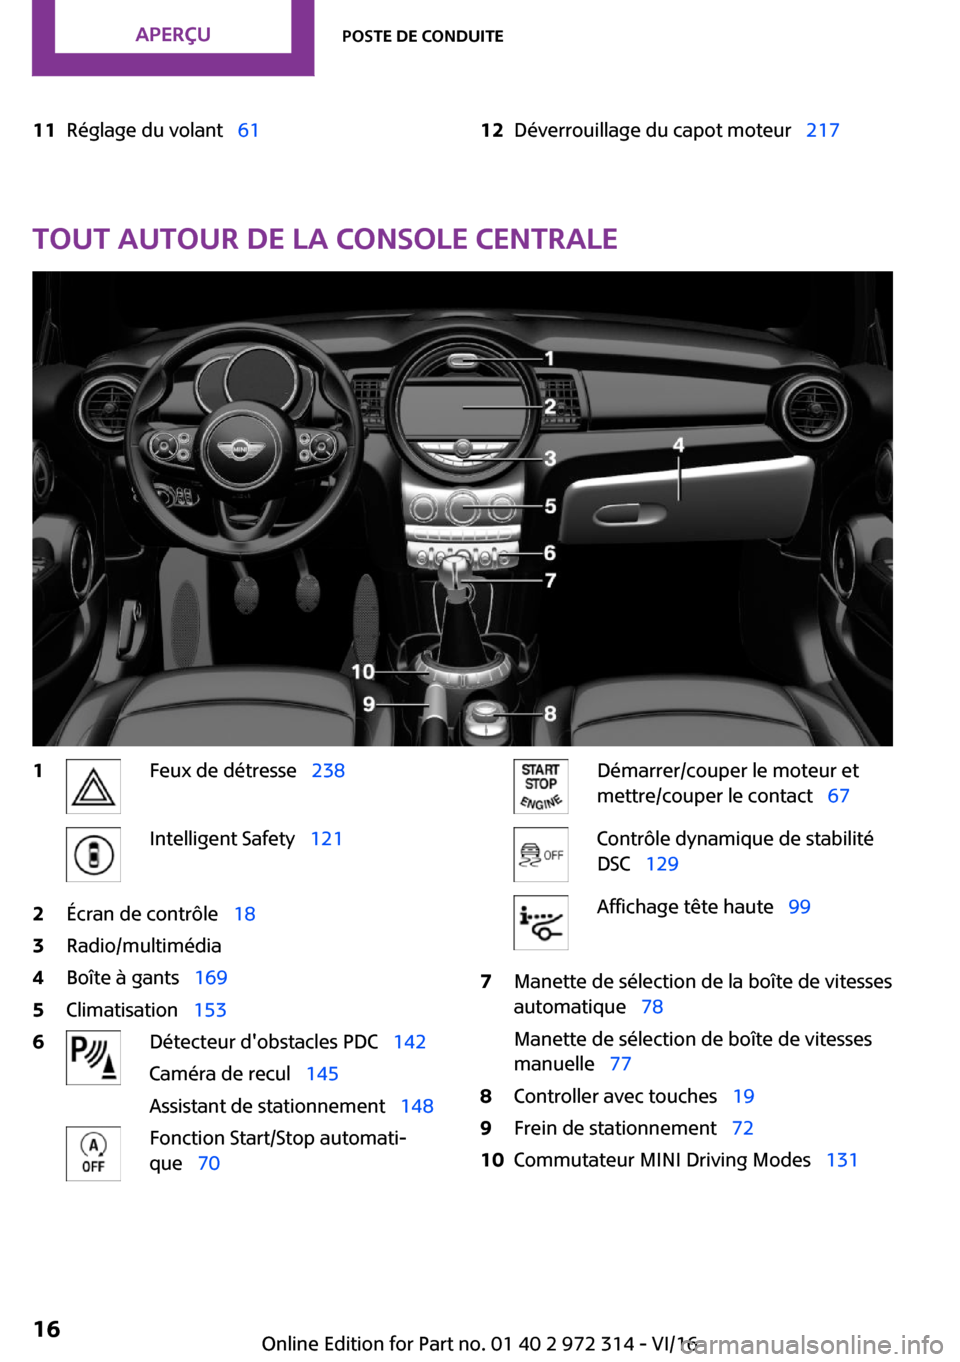 MINI 5 door 2016  Manuel du propriétaire (in French) �1�1�R�é�g�l�a�g�e� �d�u� �v�o�l�a�n�tps�6�1�1�2�D�é�v�e�r�r�o�u�i�l�l�a�g�e� �d�u� �c�a�p�o�t� �m�o�t�e�u�rps �2�1�7
�T�o�u�t��a�u�t�o�u�r��d�e��l�a��c�o�n�s�o�l�e��c�e�n�t�r�a�l�e
�1�F�e�